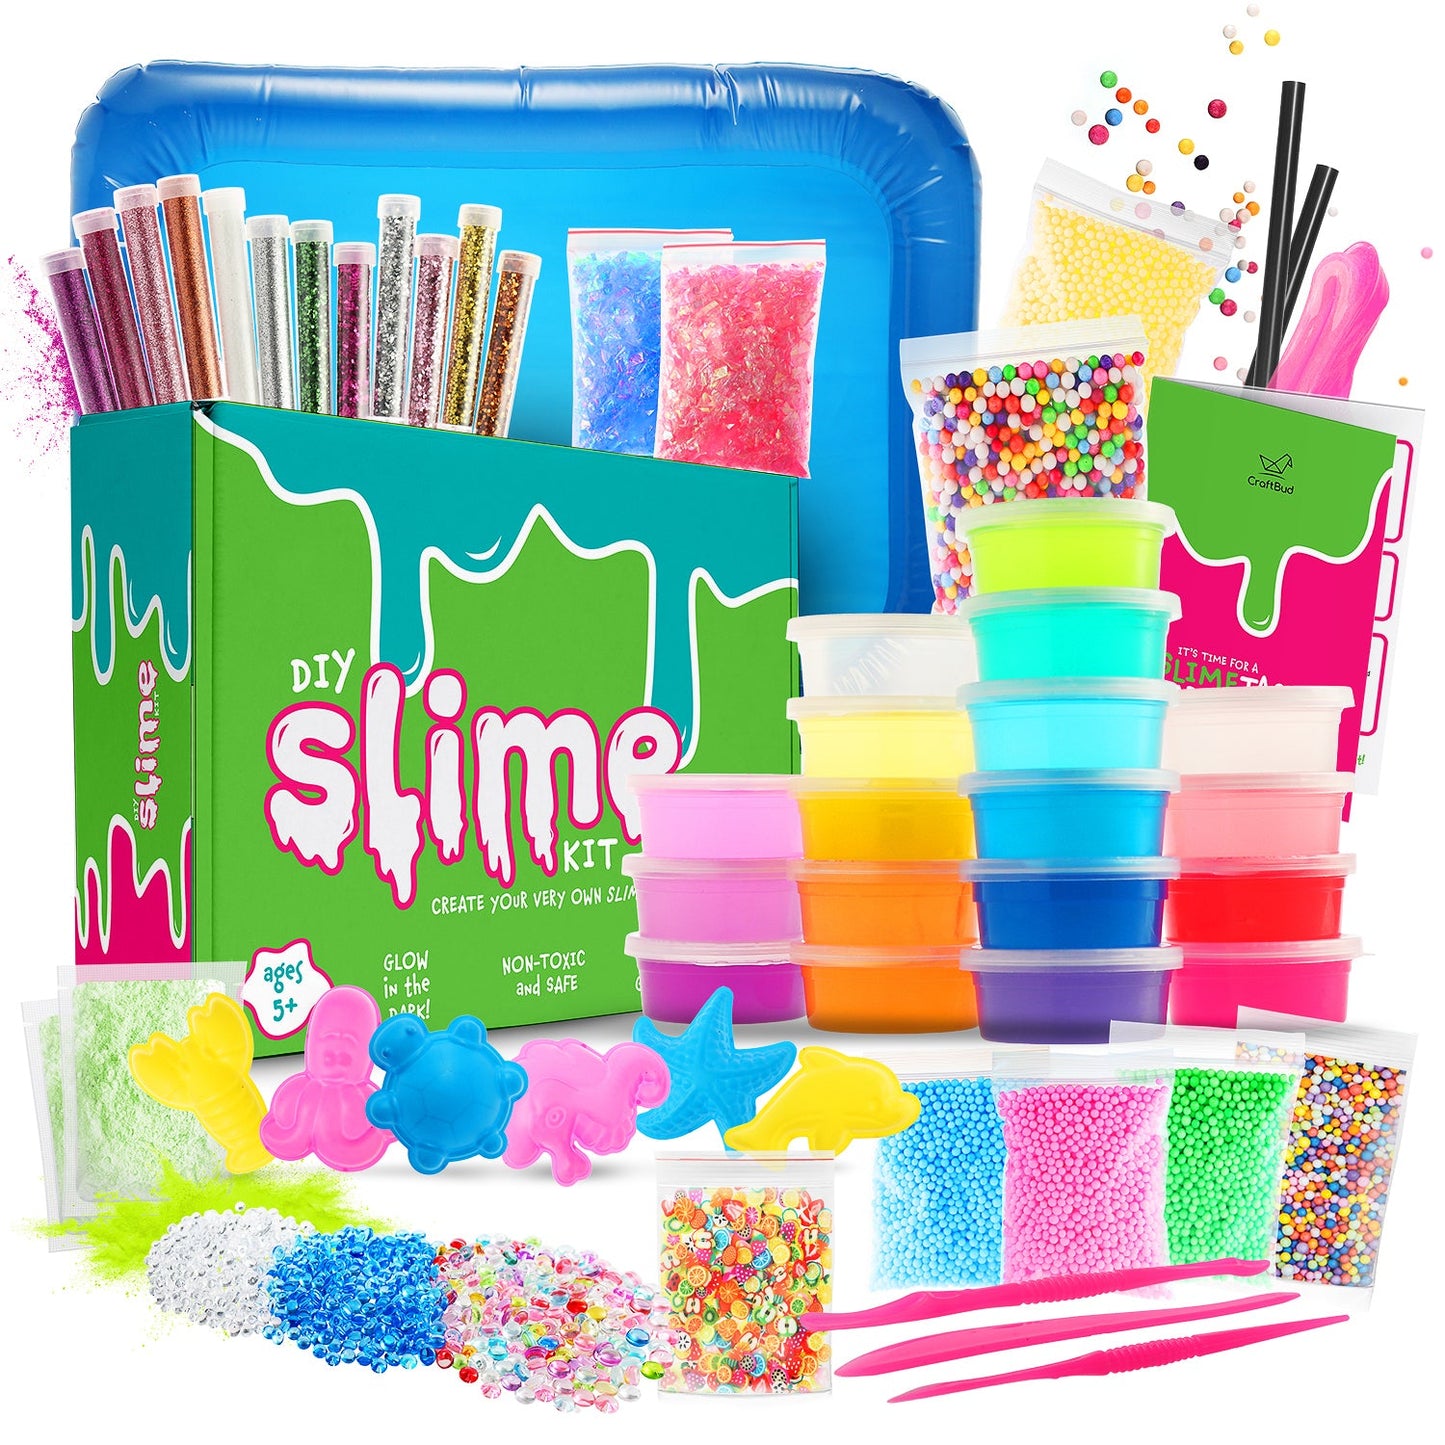 DIY Slime Kit For Kids everything shown